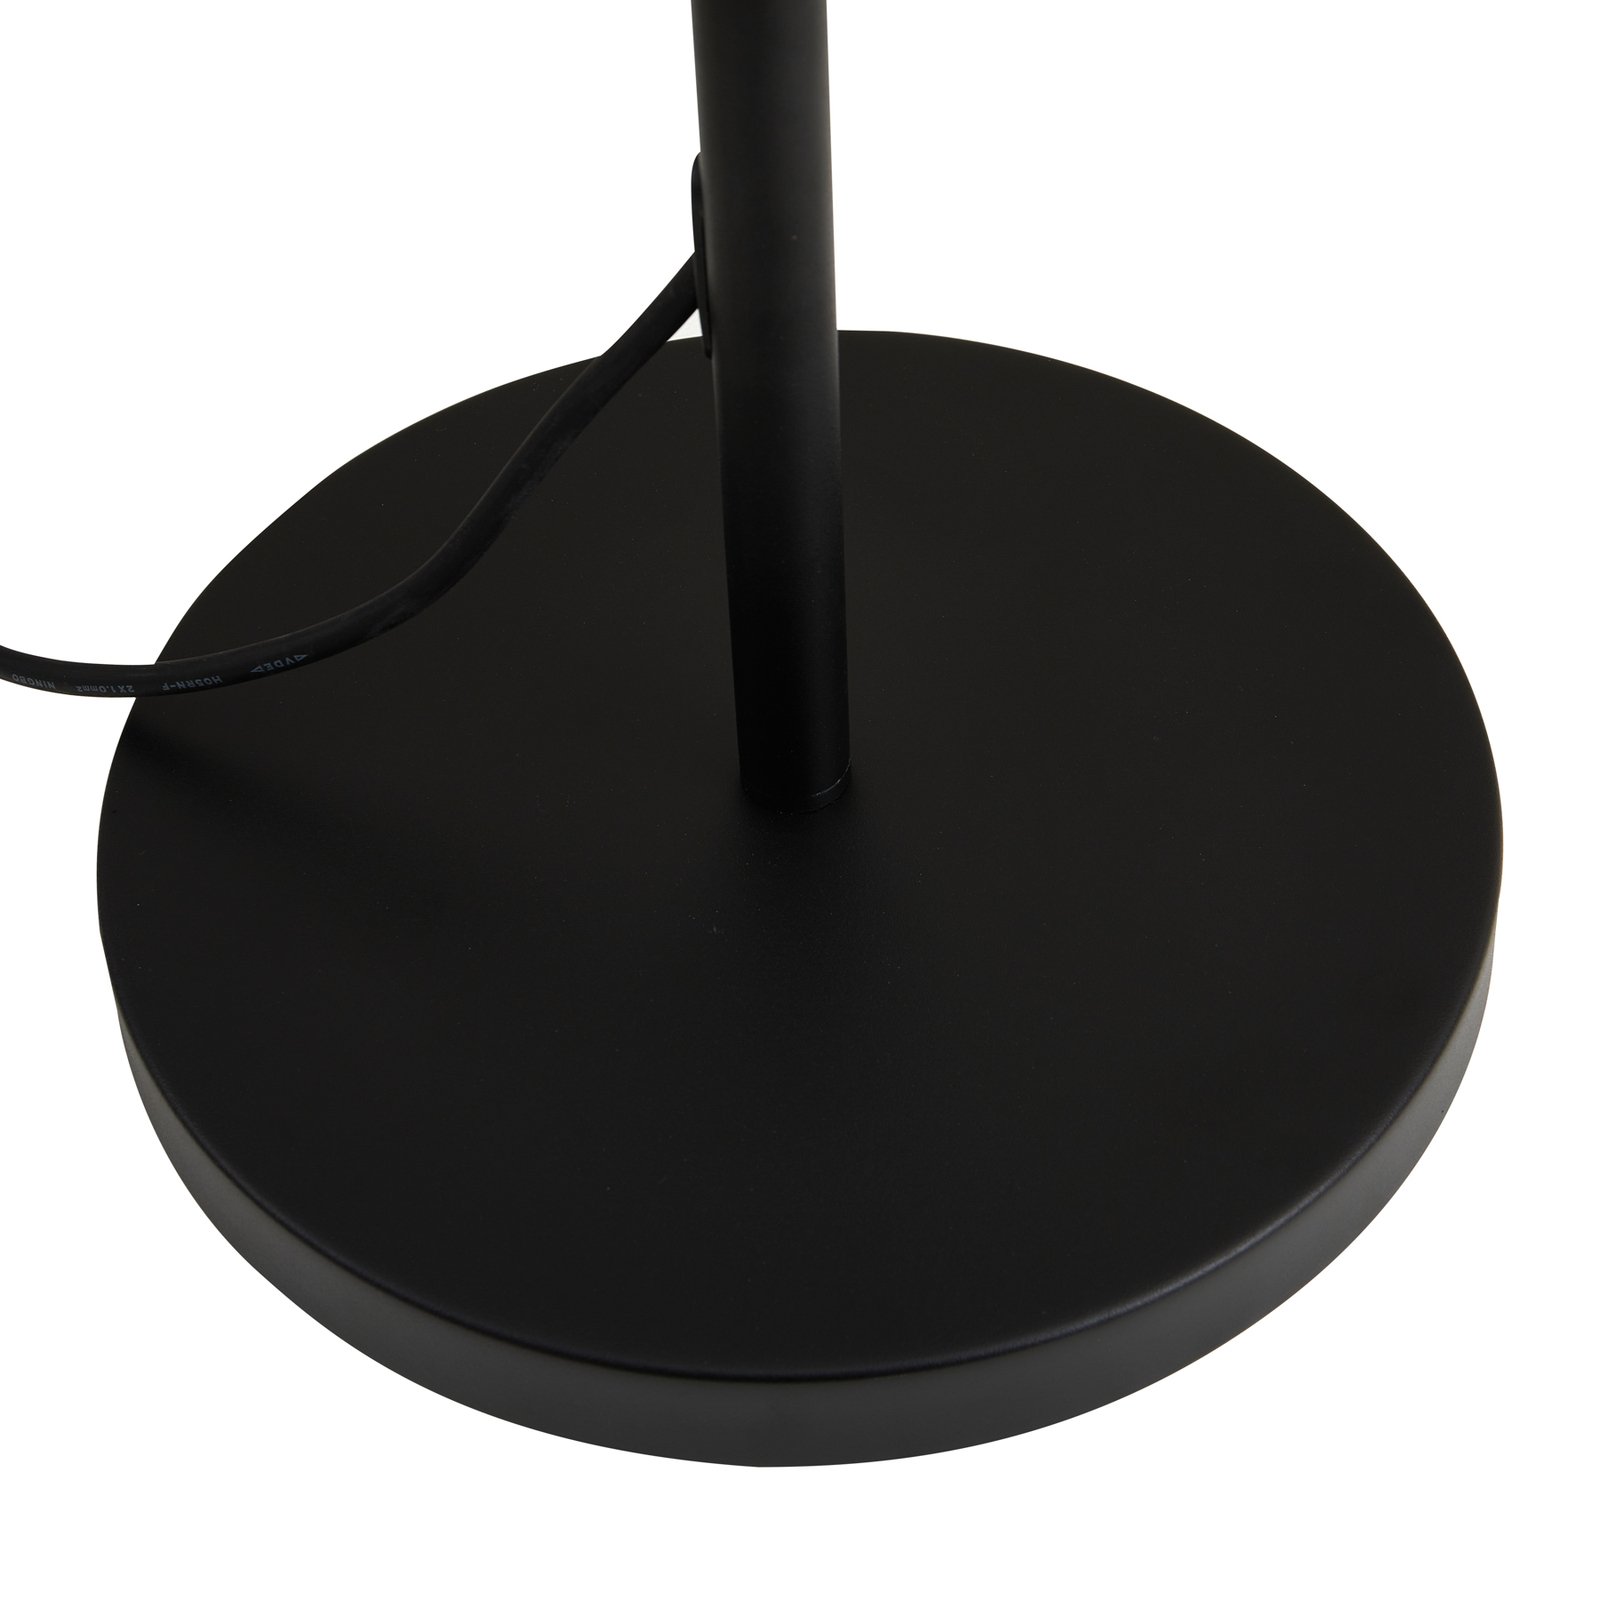 Lucande LED lámpara de pie exterior Heribio, negro, hierro, 153 cm